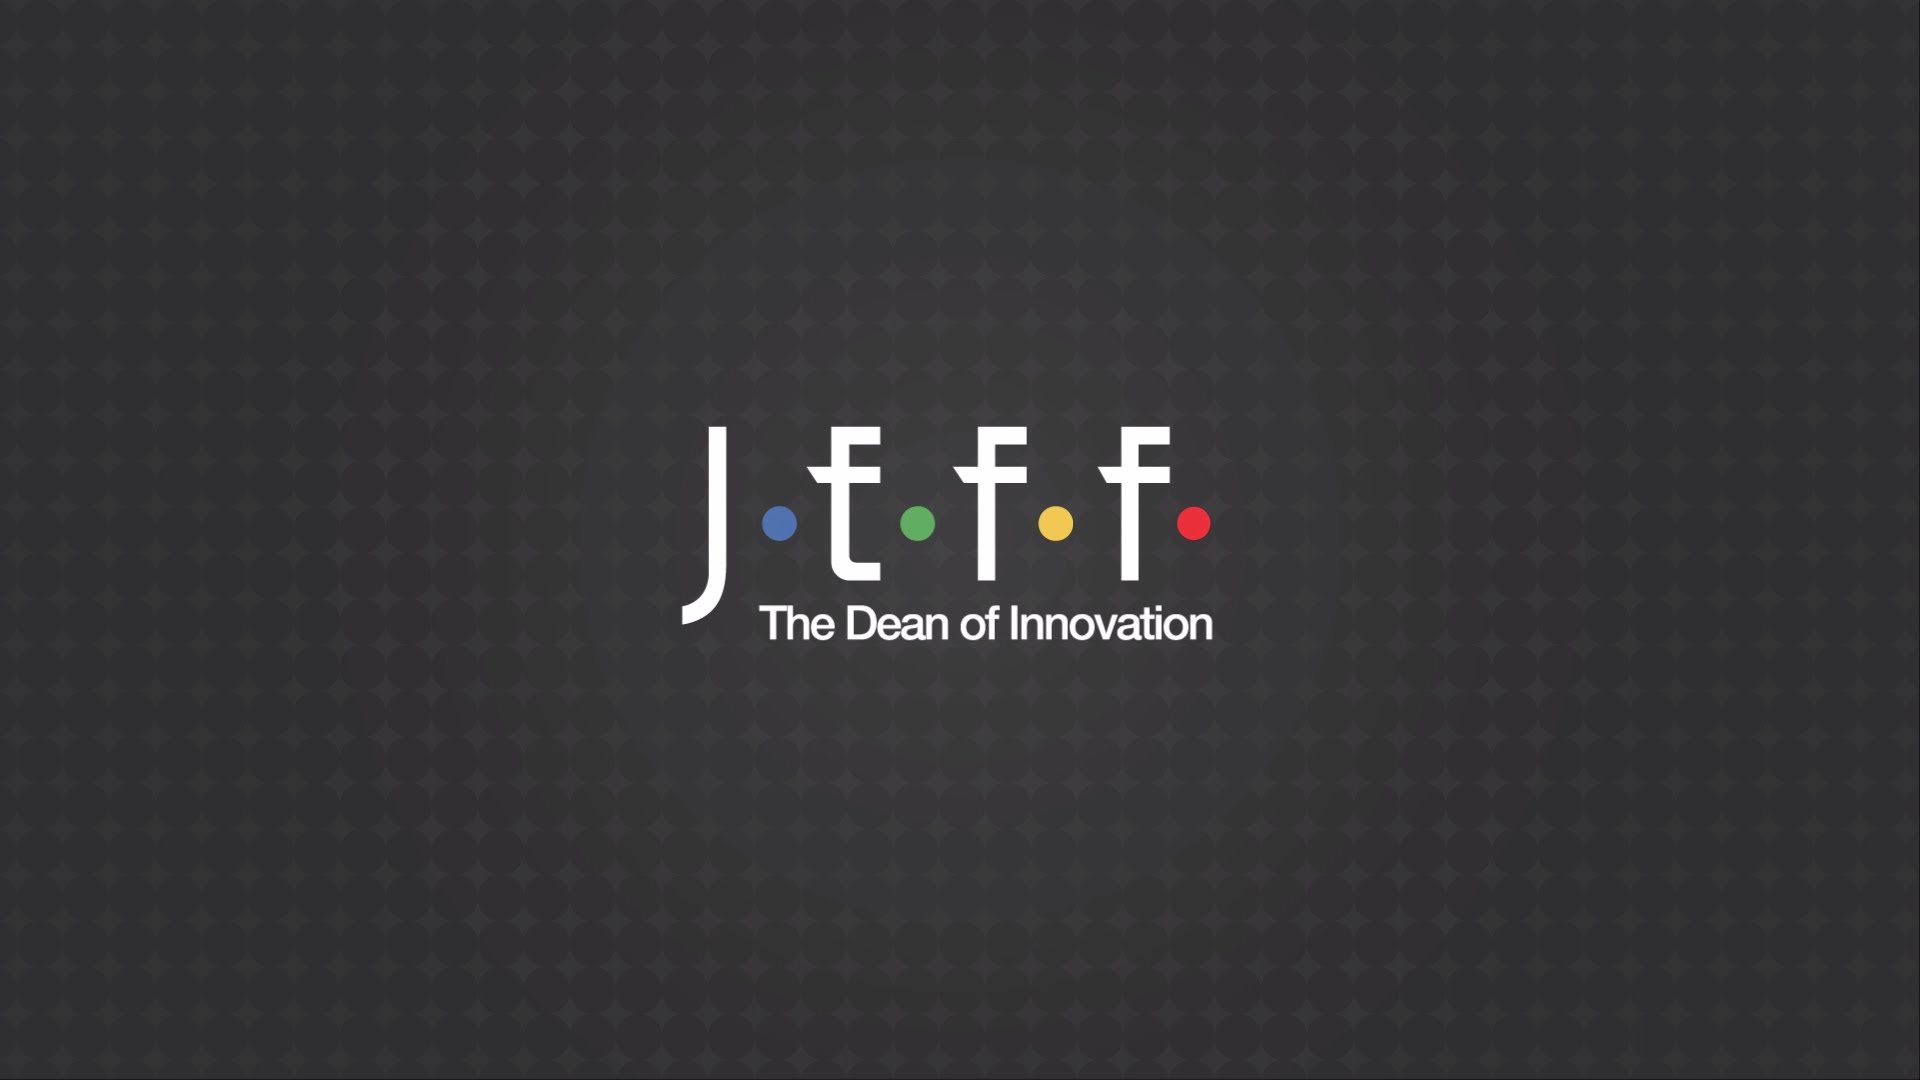 Jeff DeGraff – The Dean of Innovation